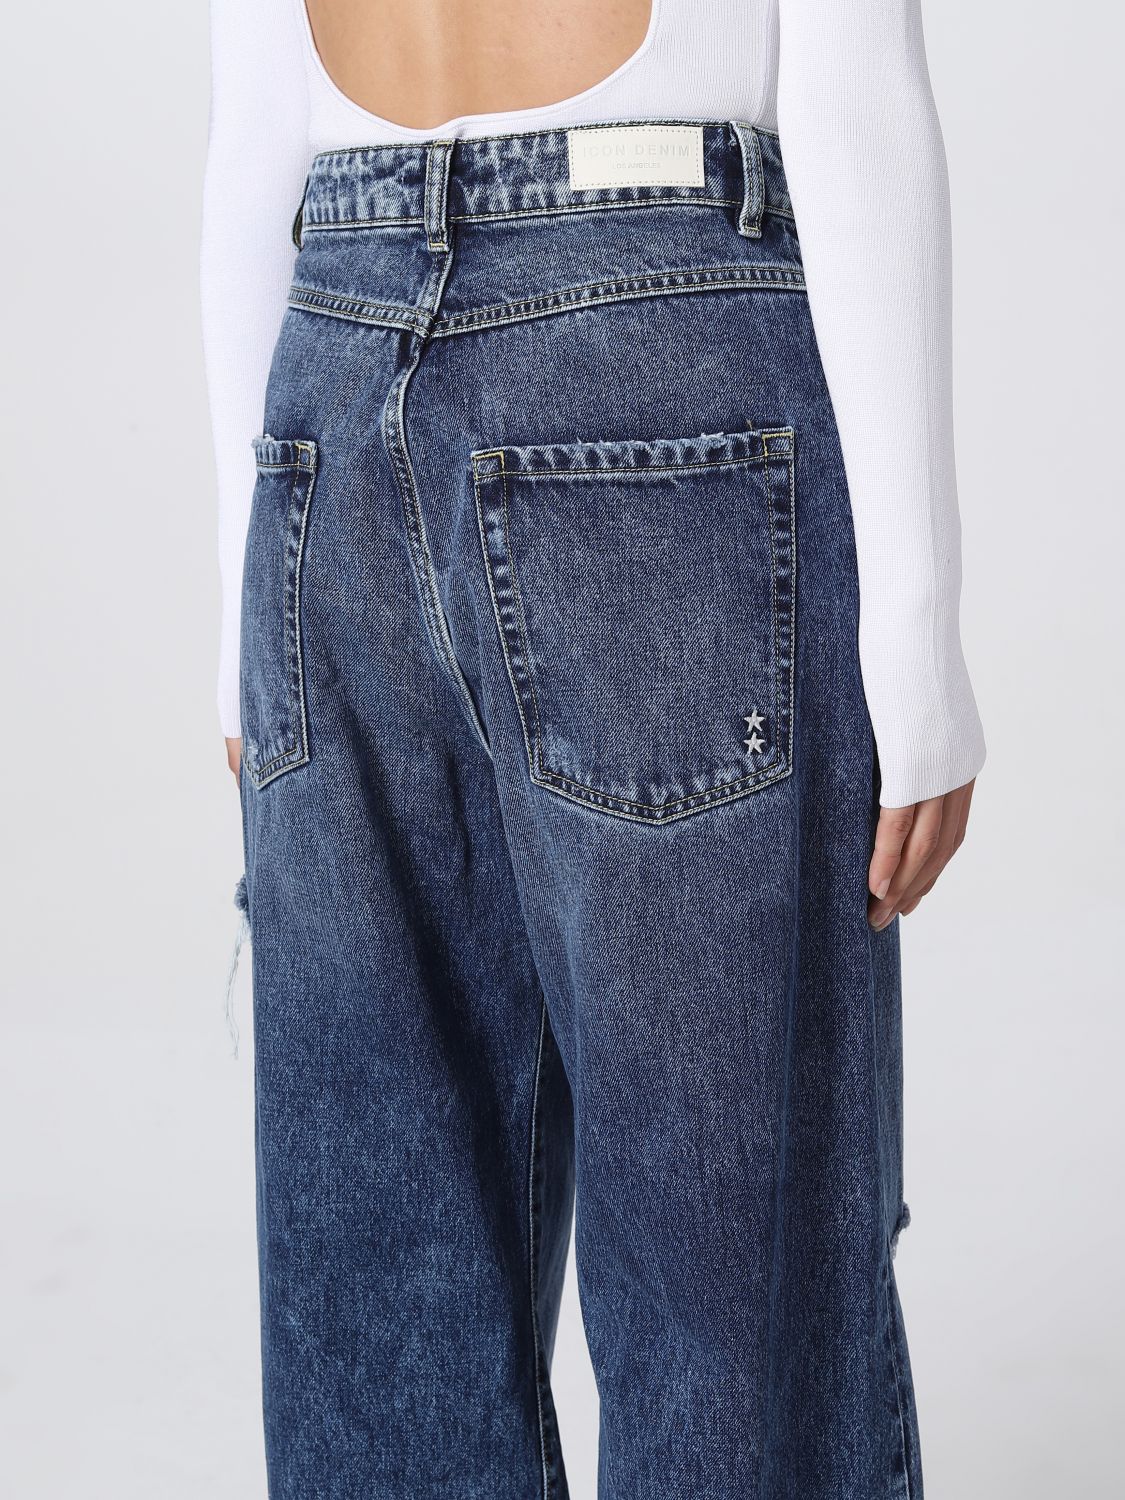 ICON DENIM LOS ANGELES: jeans for women - Denim | Icon Denim Los ...